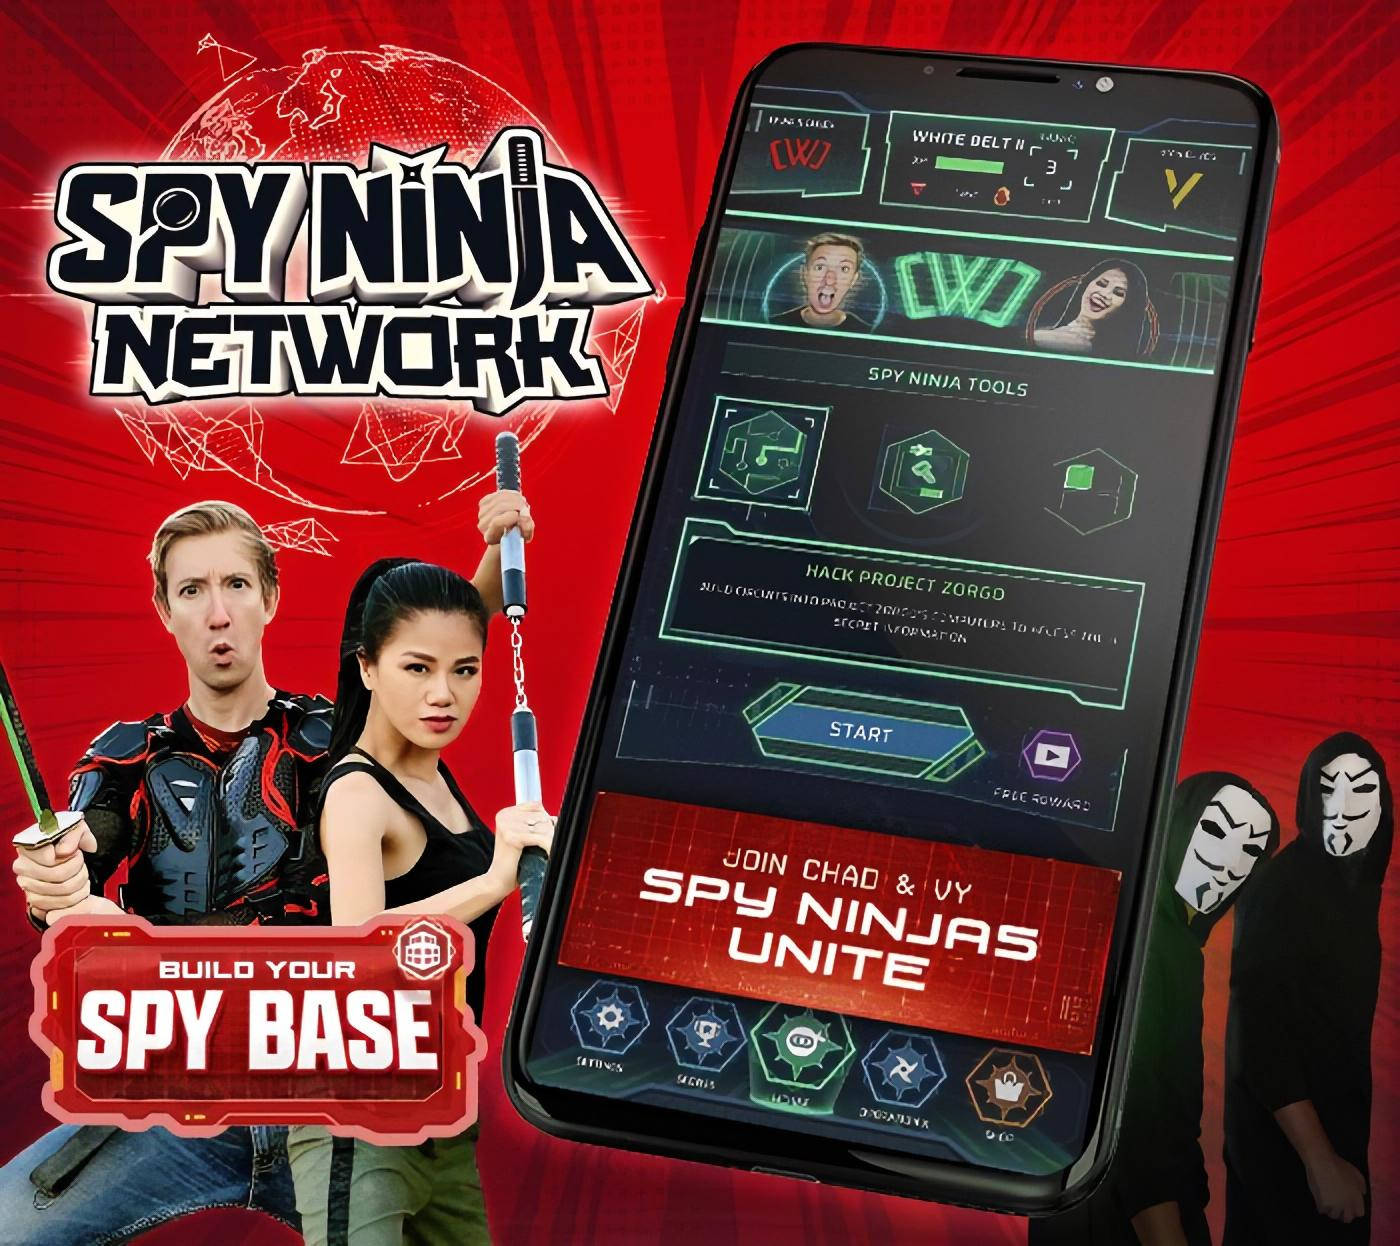 Spy Ninja Network Chad And Vy